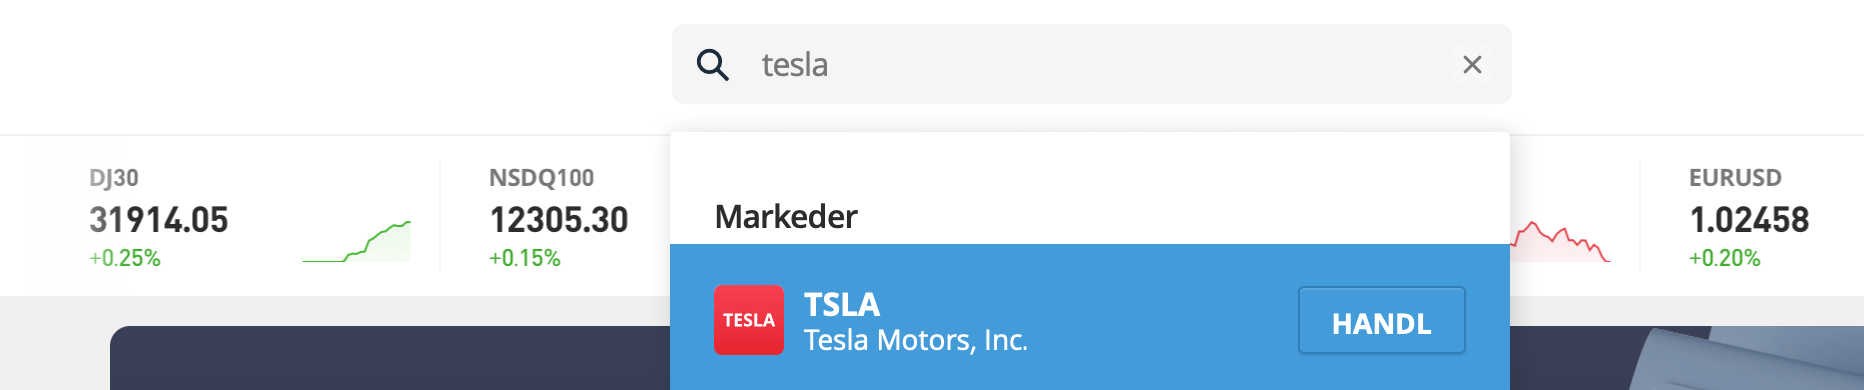 handl Tesla